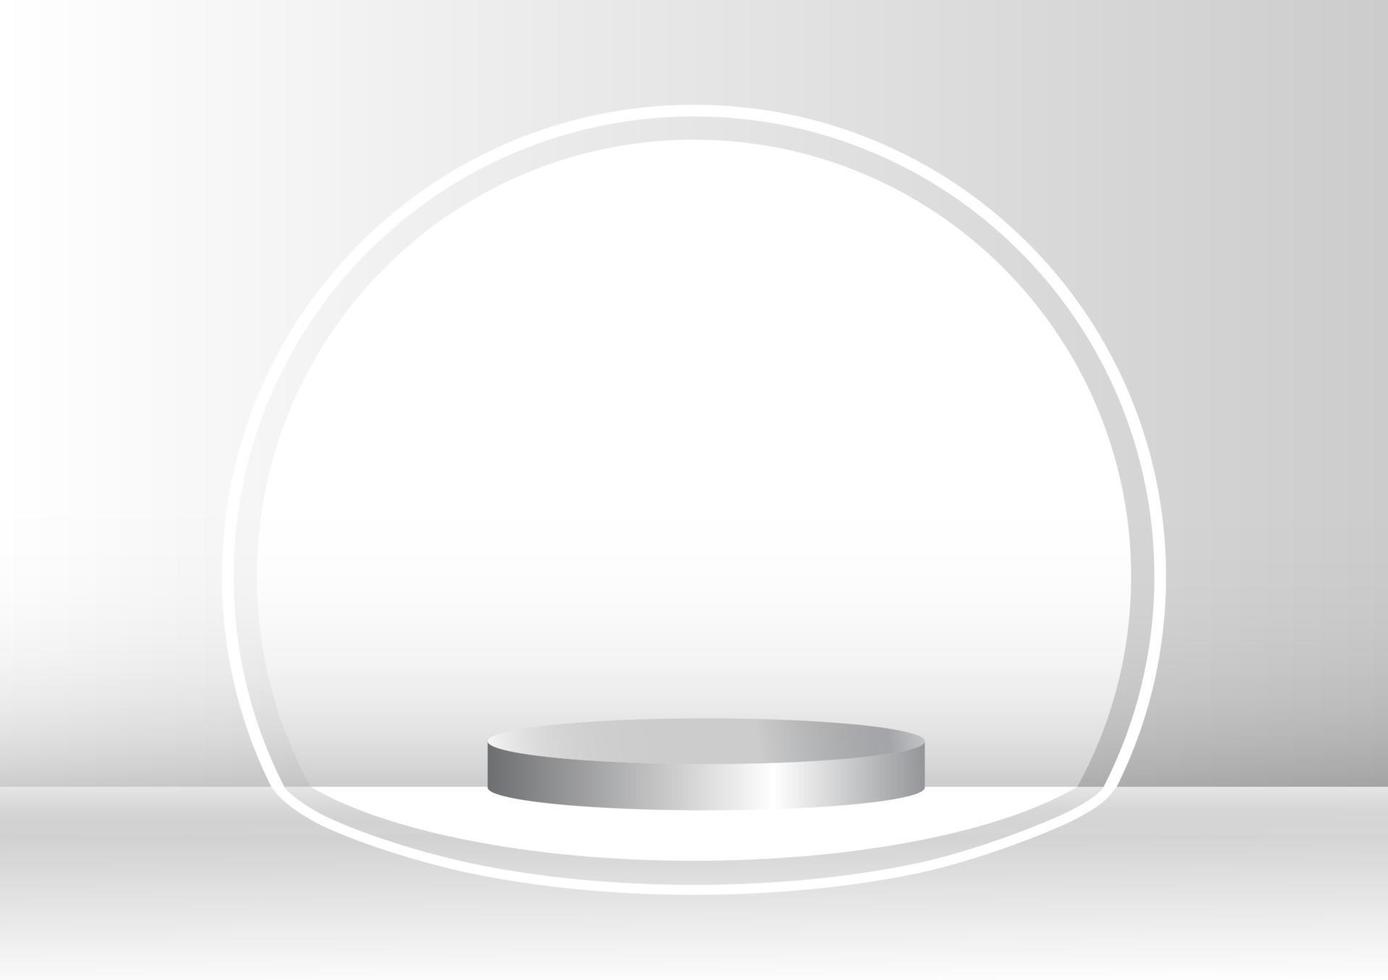 modern stil vit cirkel ringa presentation silver- bakgrund vektor